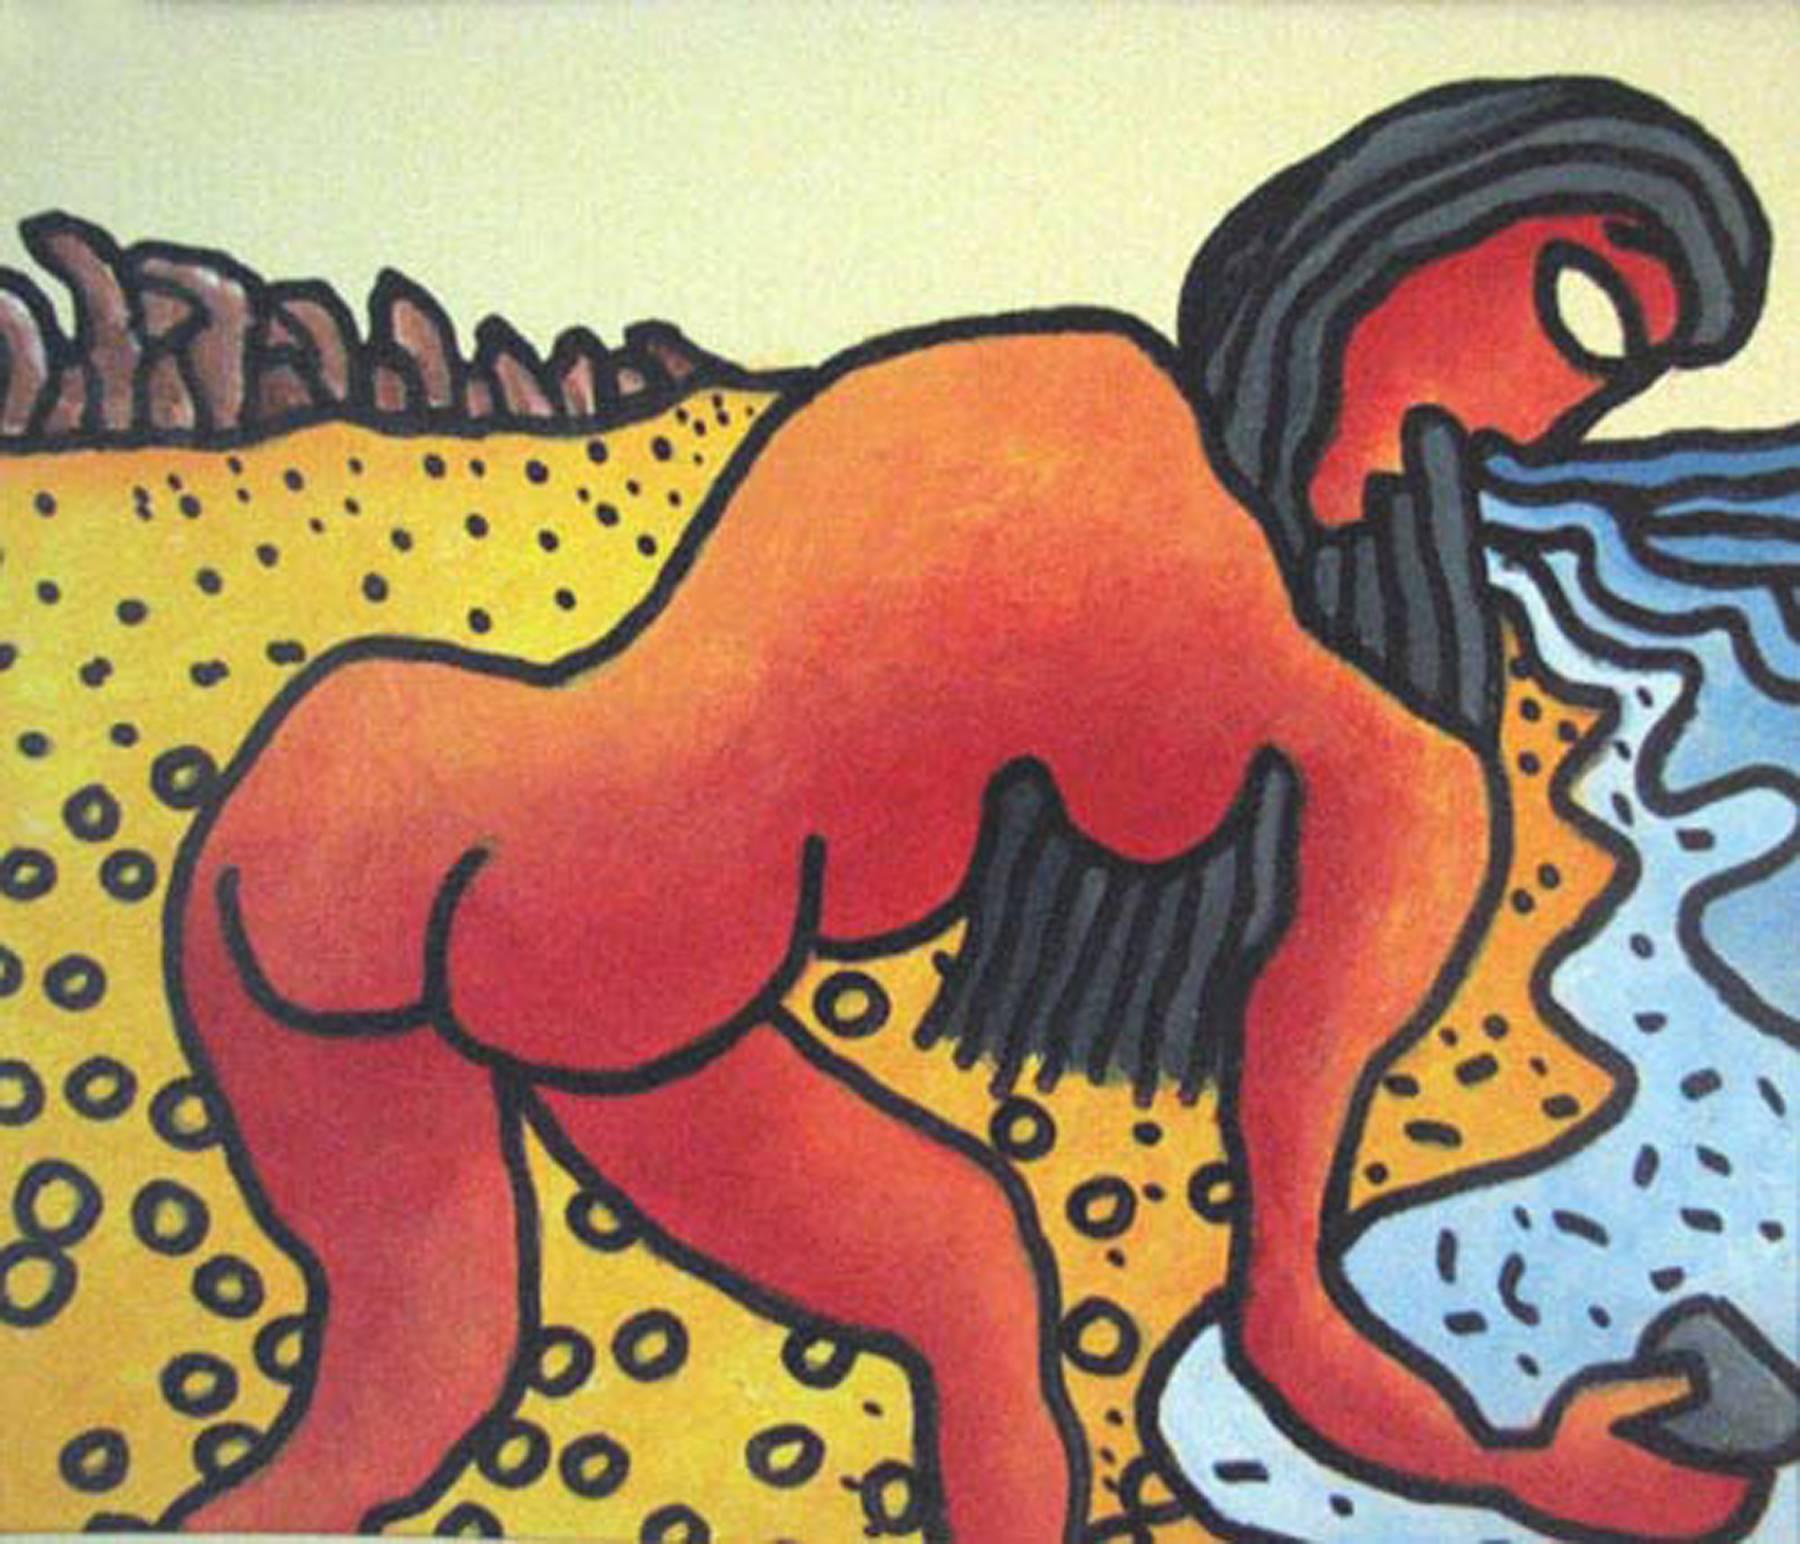 Prakash Karmarkar Nude Painting - Beach Series, Mixed Media on Paper, Red, Yellow, Master Indian Artist "In Stock"